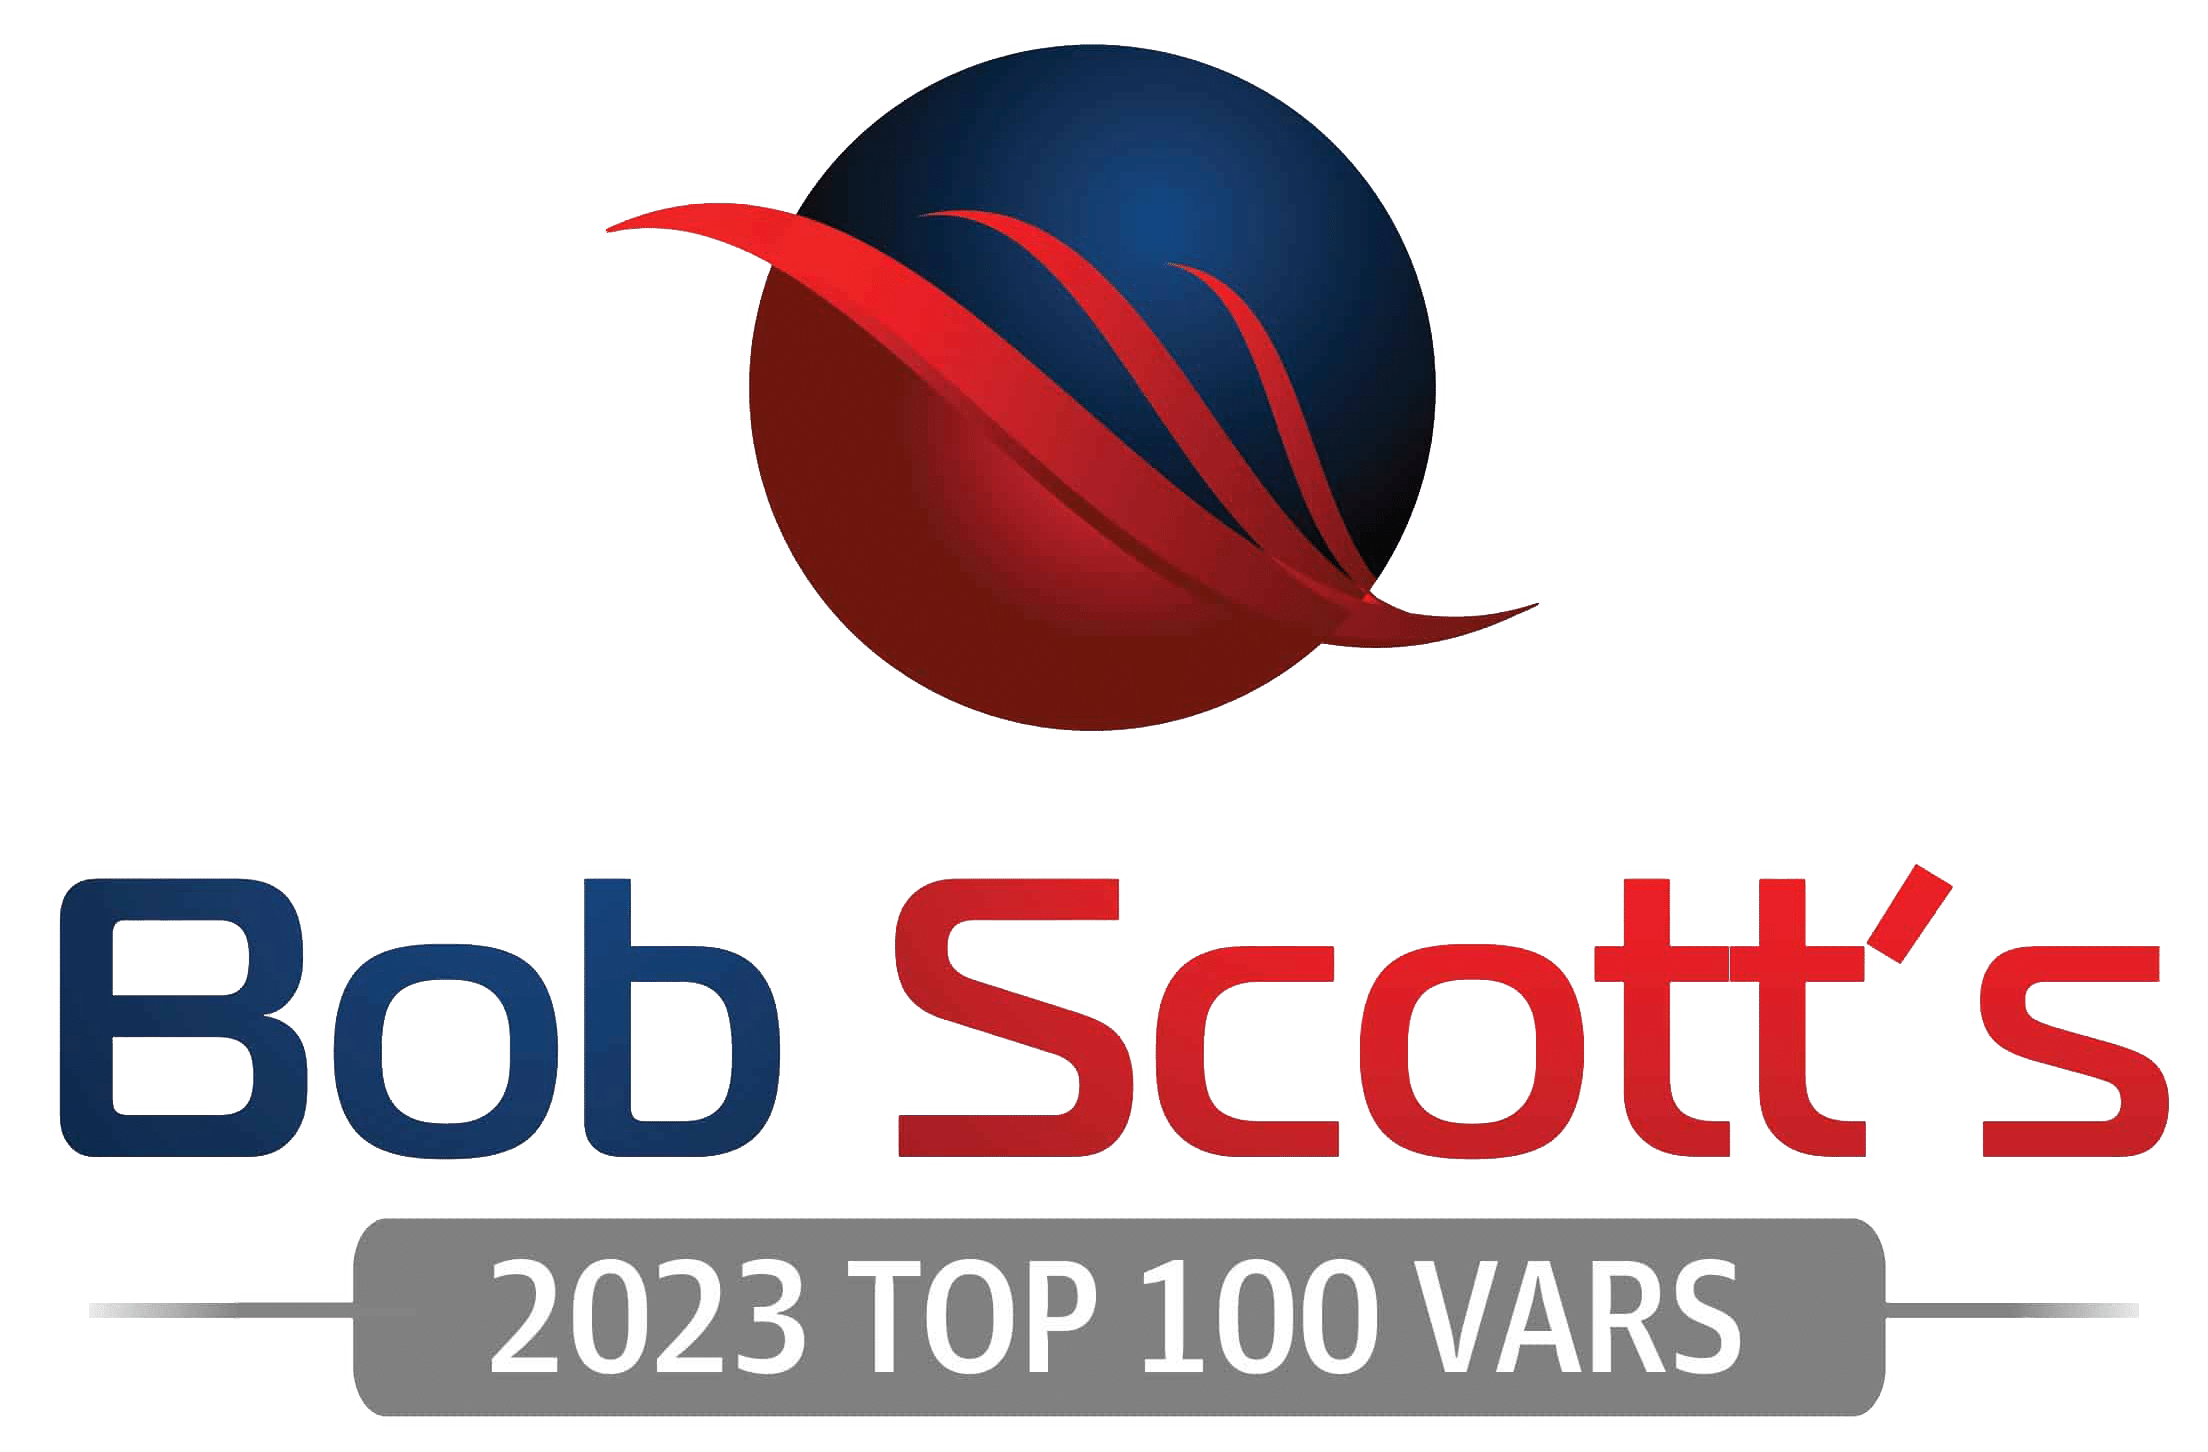 Bob Scott's 2023 Top 100 Vars